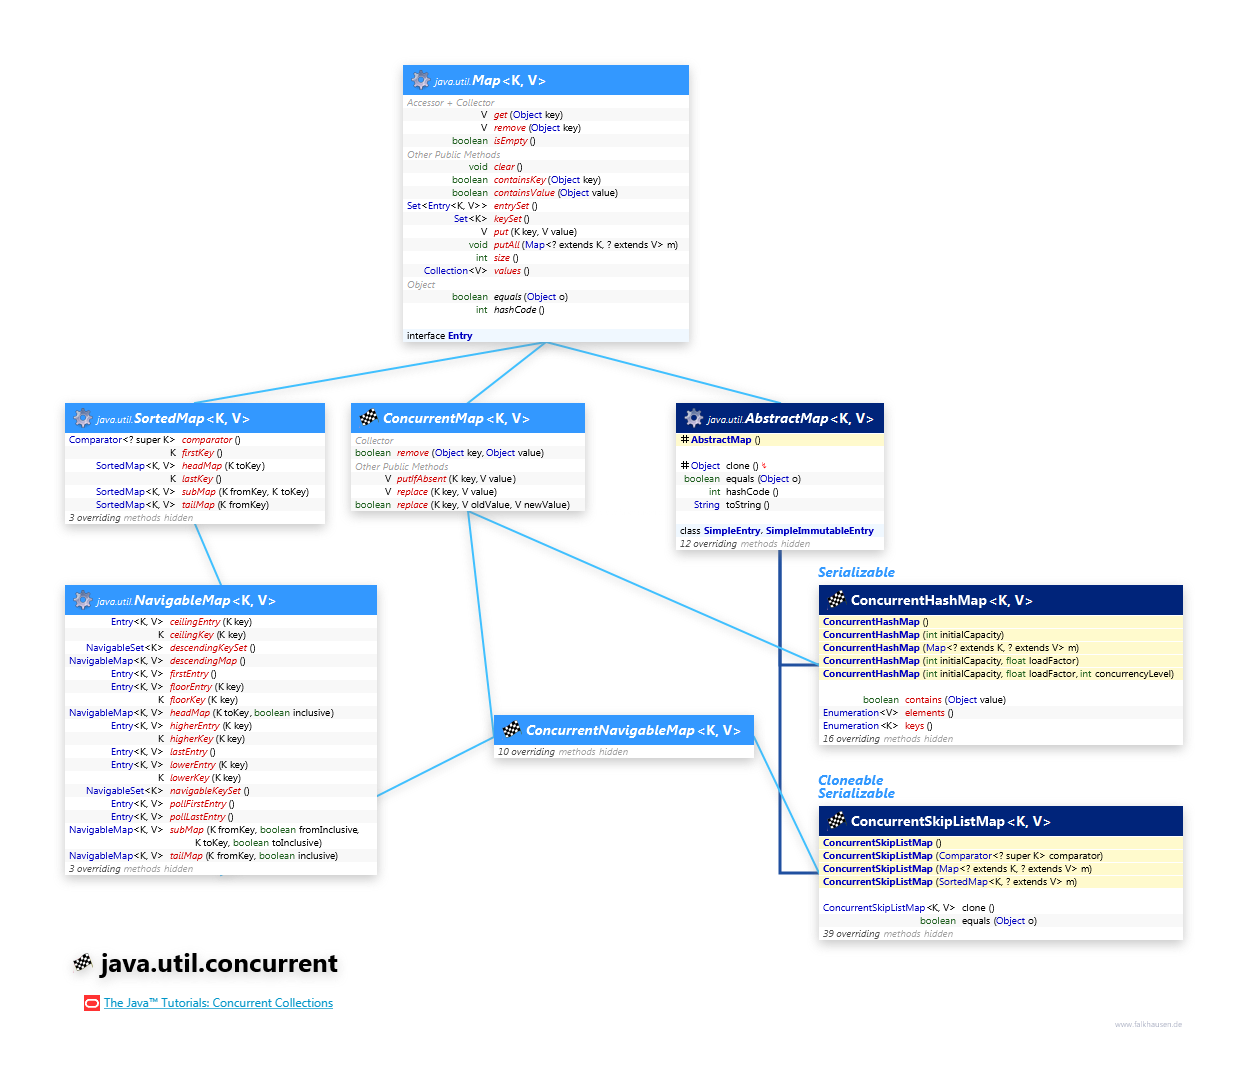 java.util.concurrent Map Concurrent class diagram and api documentation for Java 7